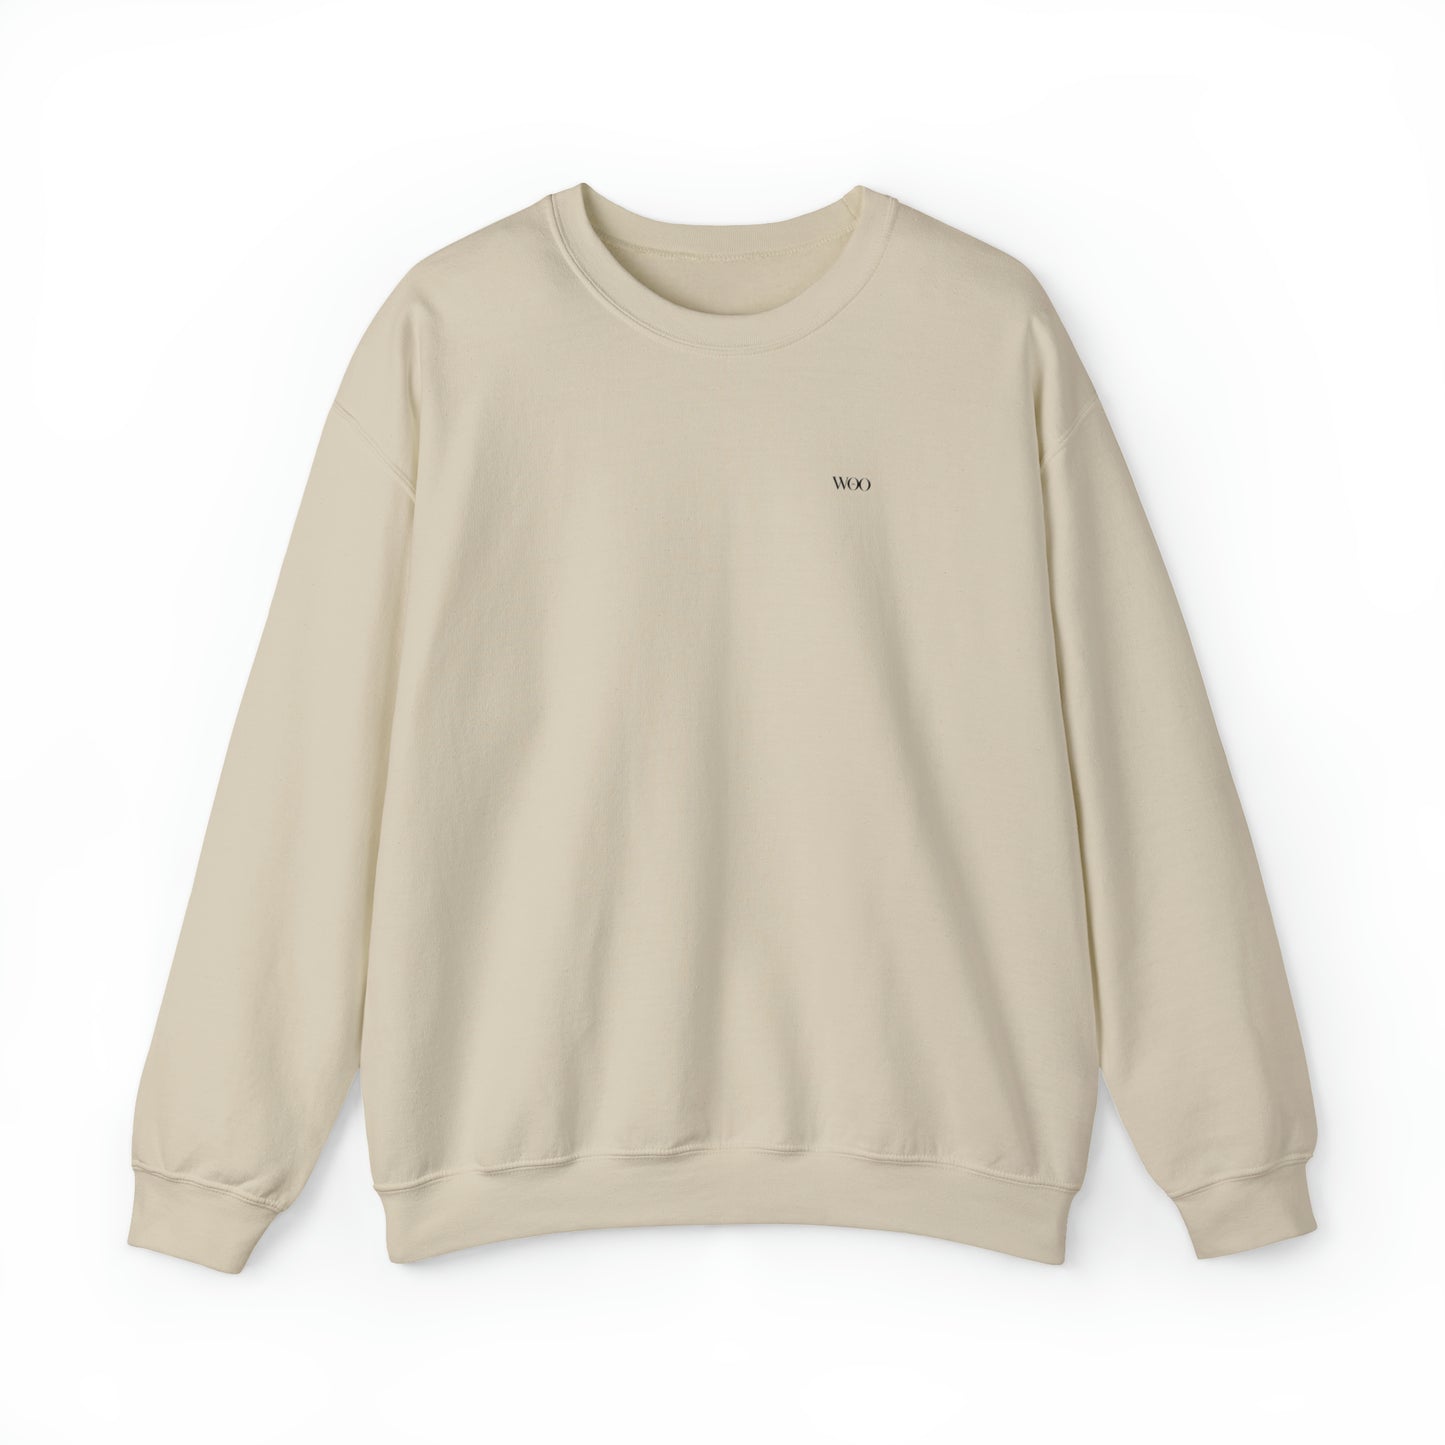 Cascatina - sweatshirt